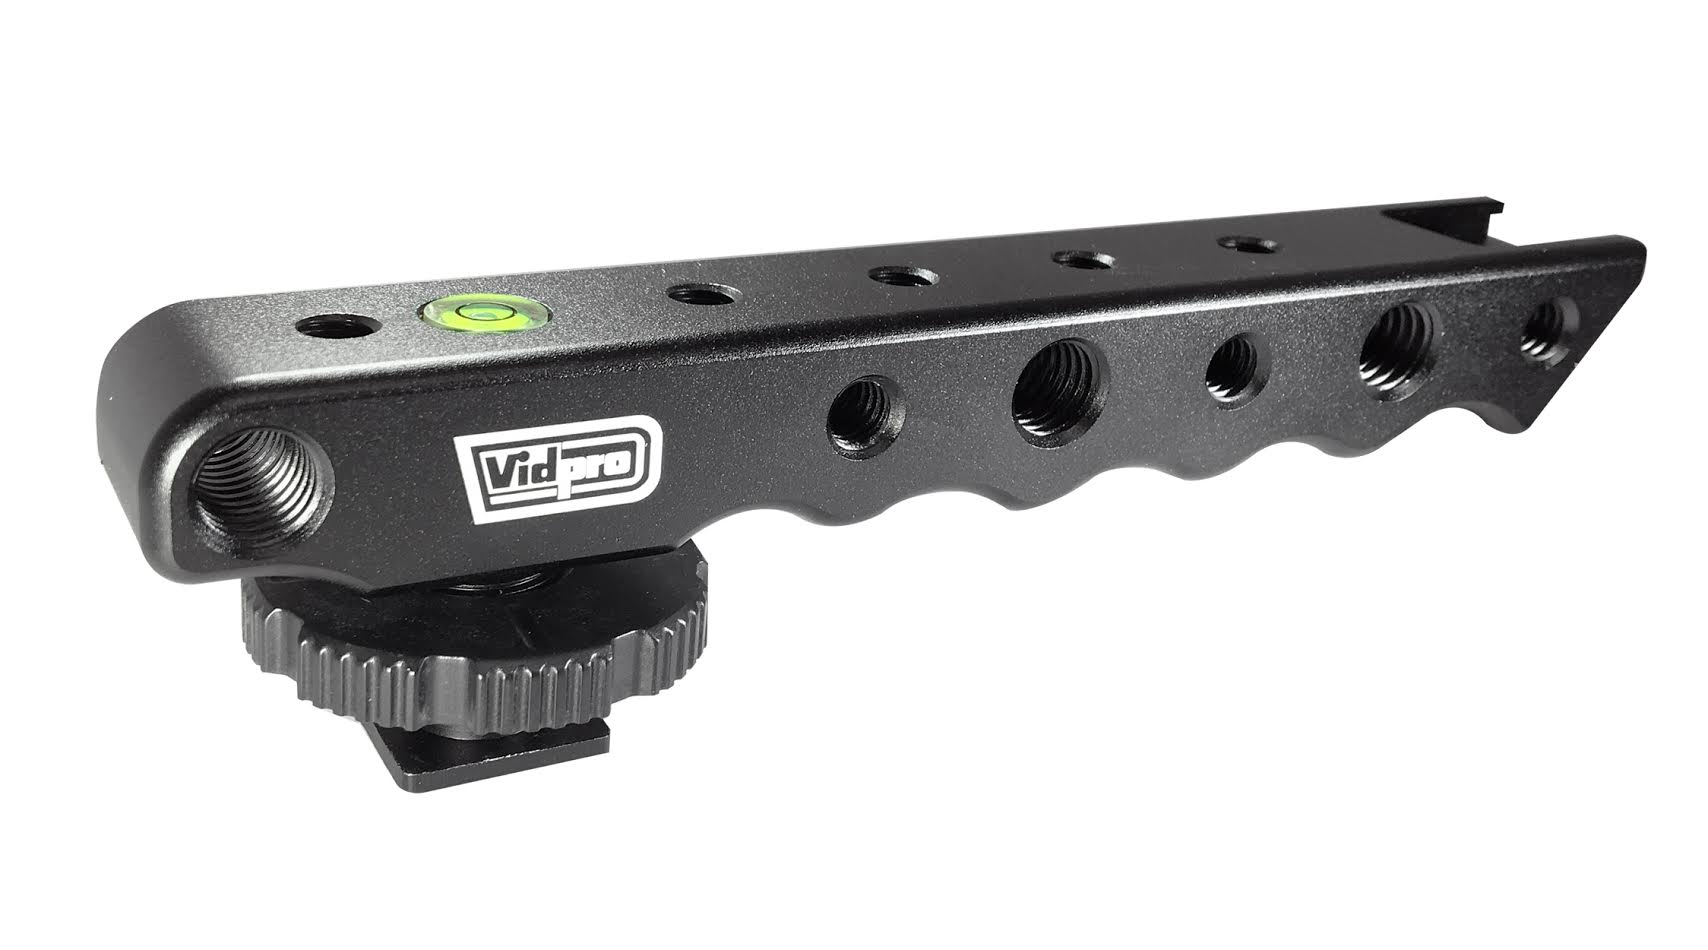 Video Stabilizers for Vivitar DVR426 Camcorder